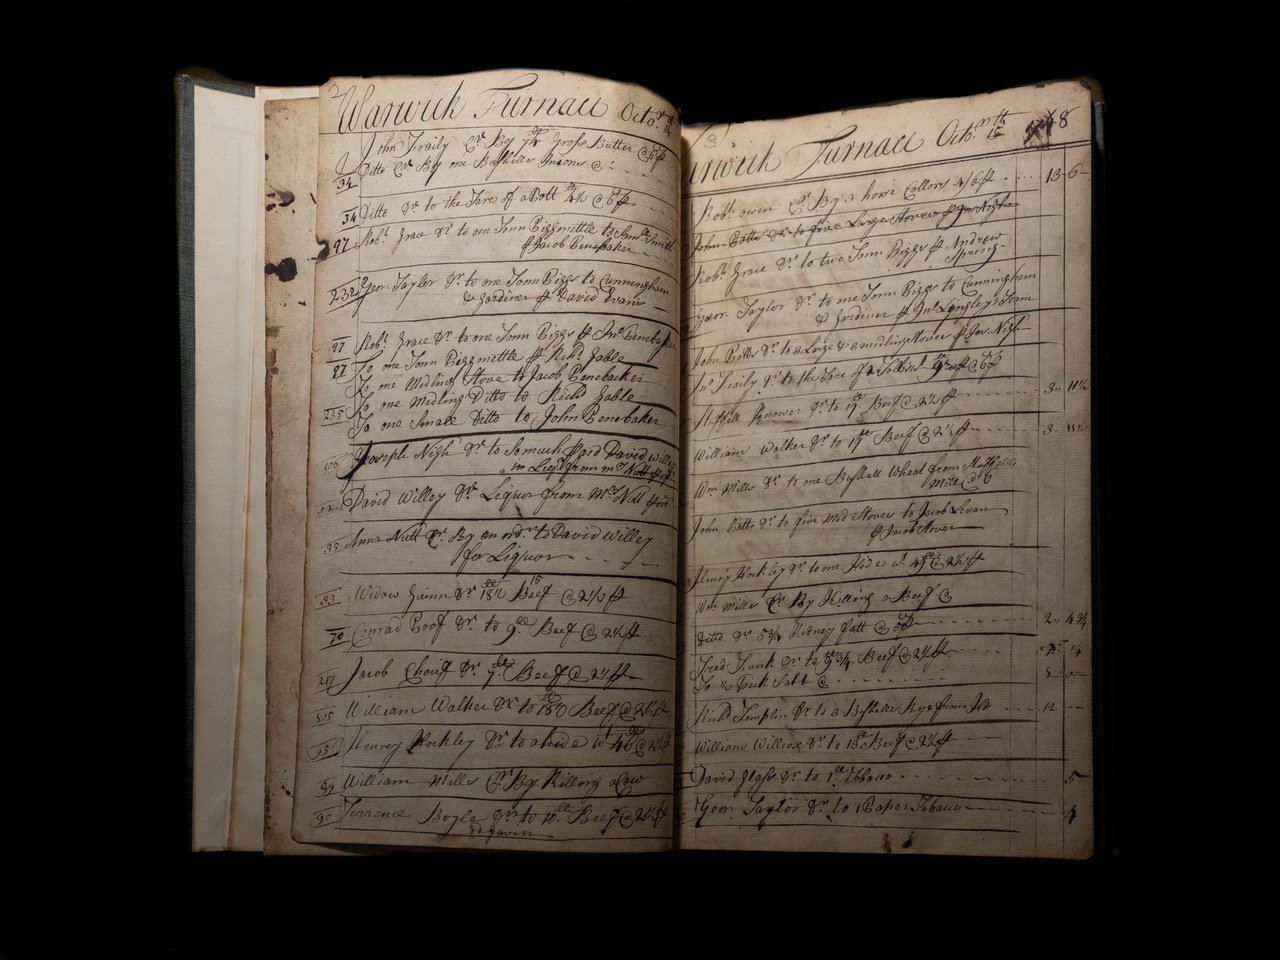 Warwick Furnace Journal 1748 | Historical Society of Pennsylvania